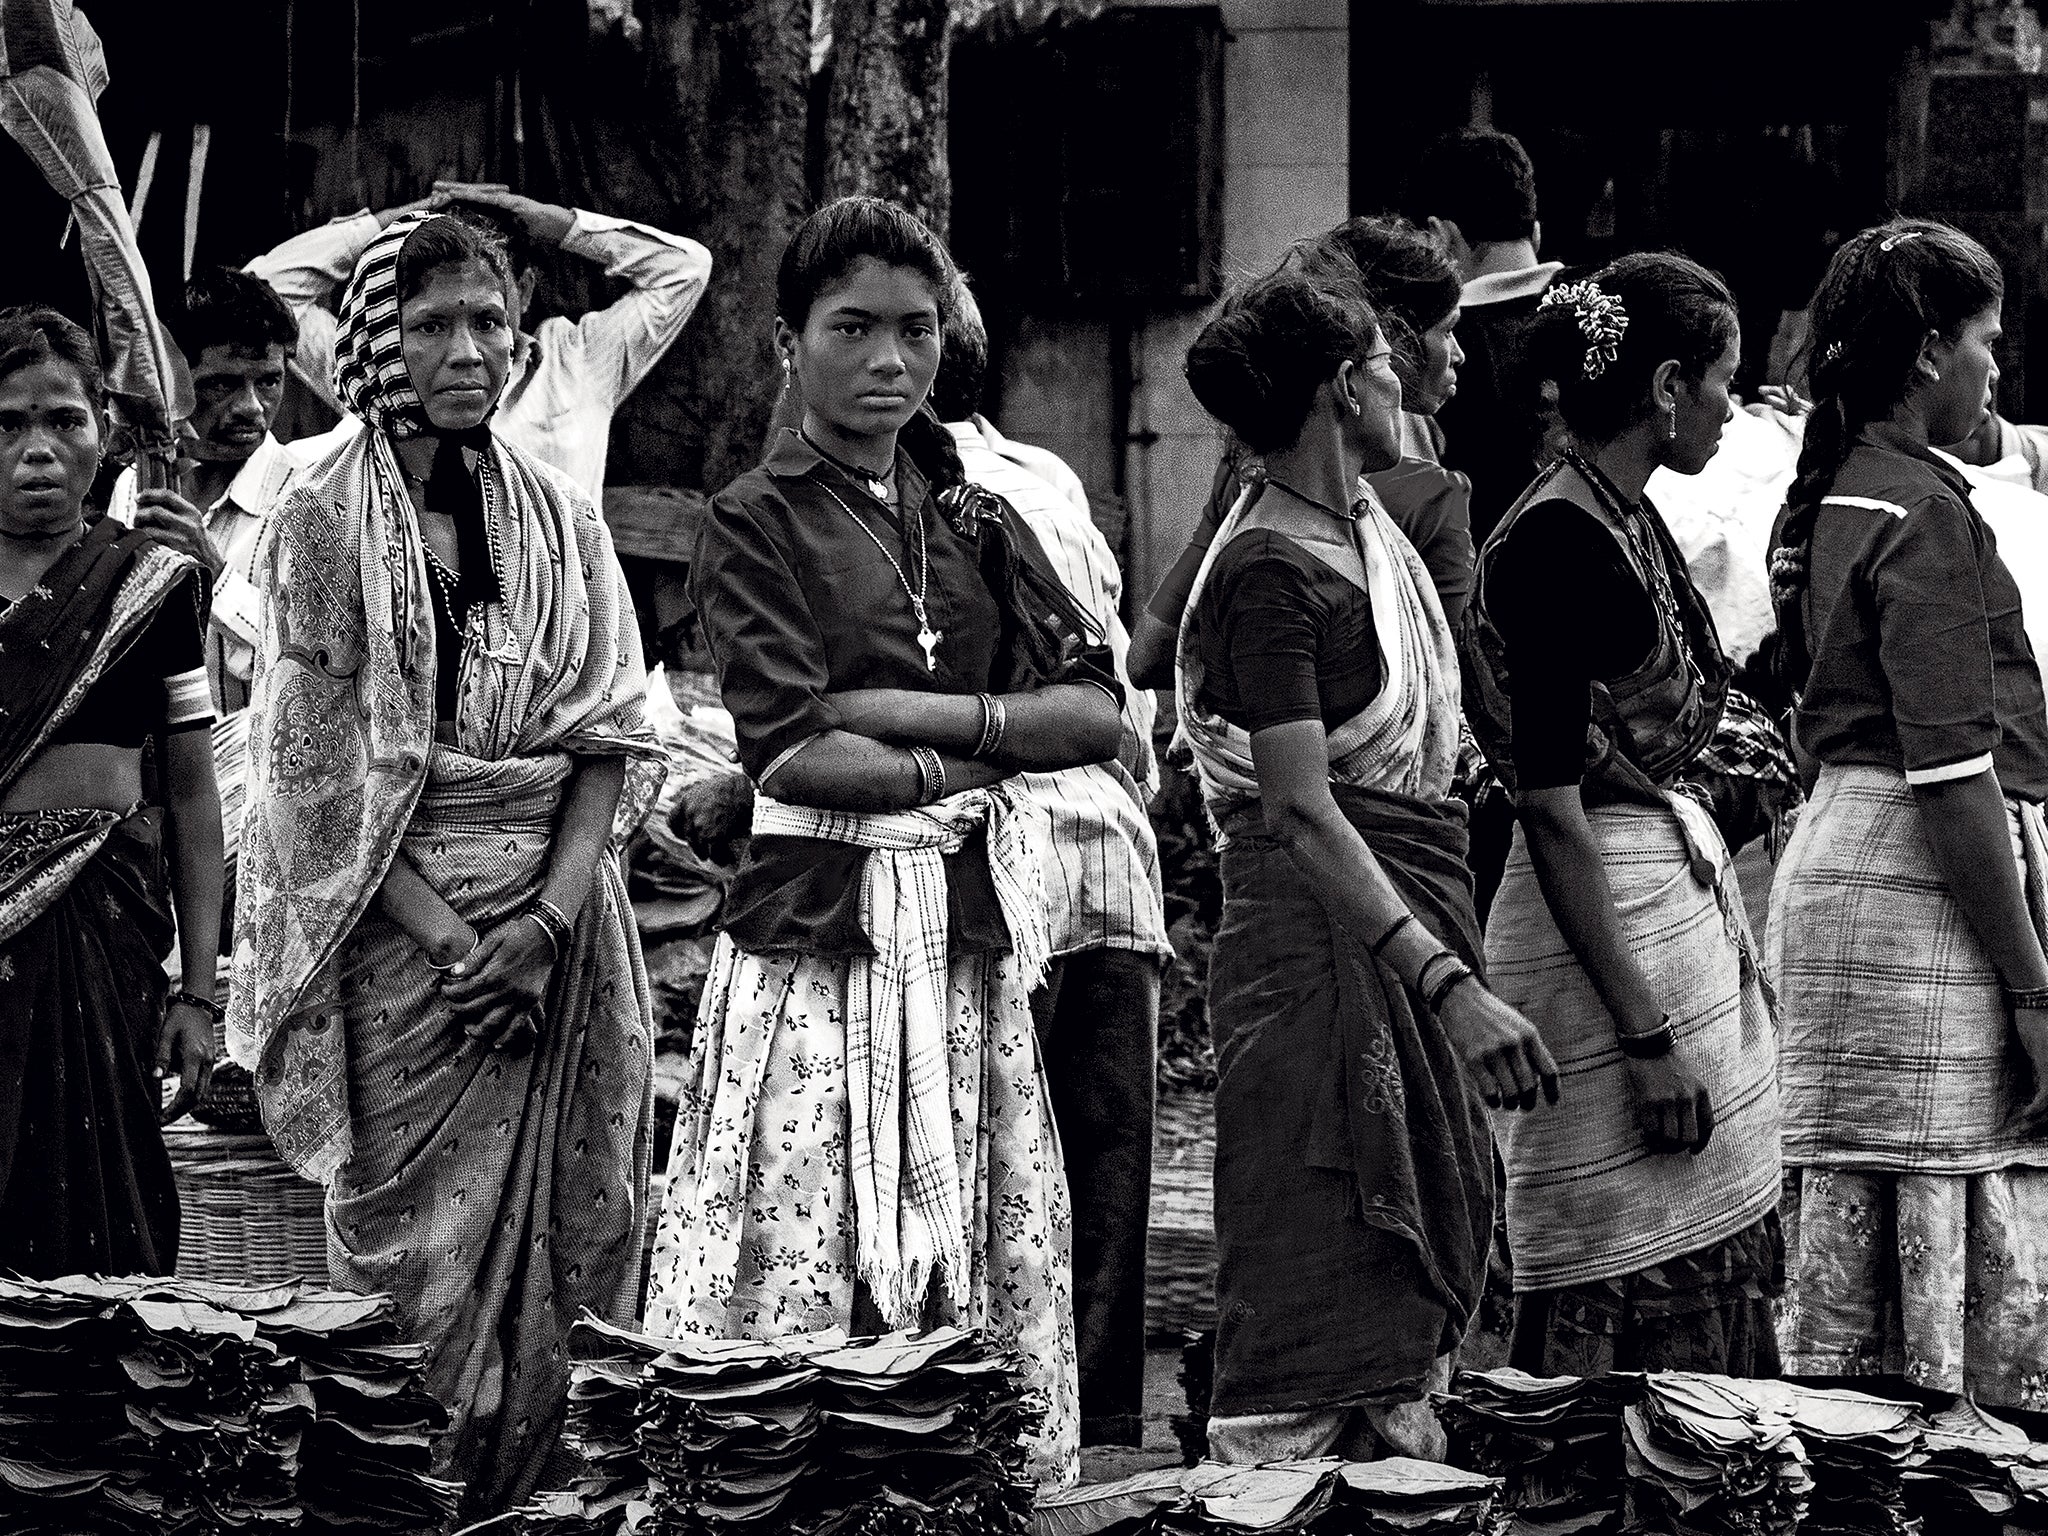 Workers in Delhi, India